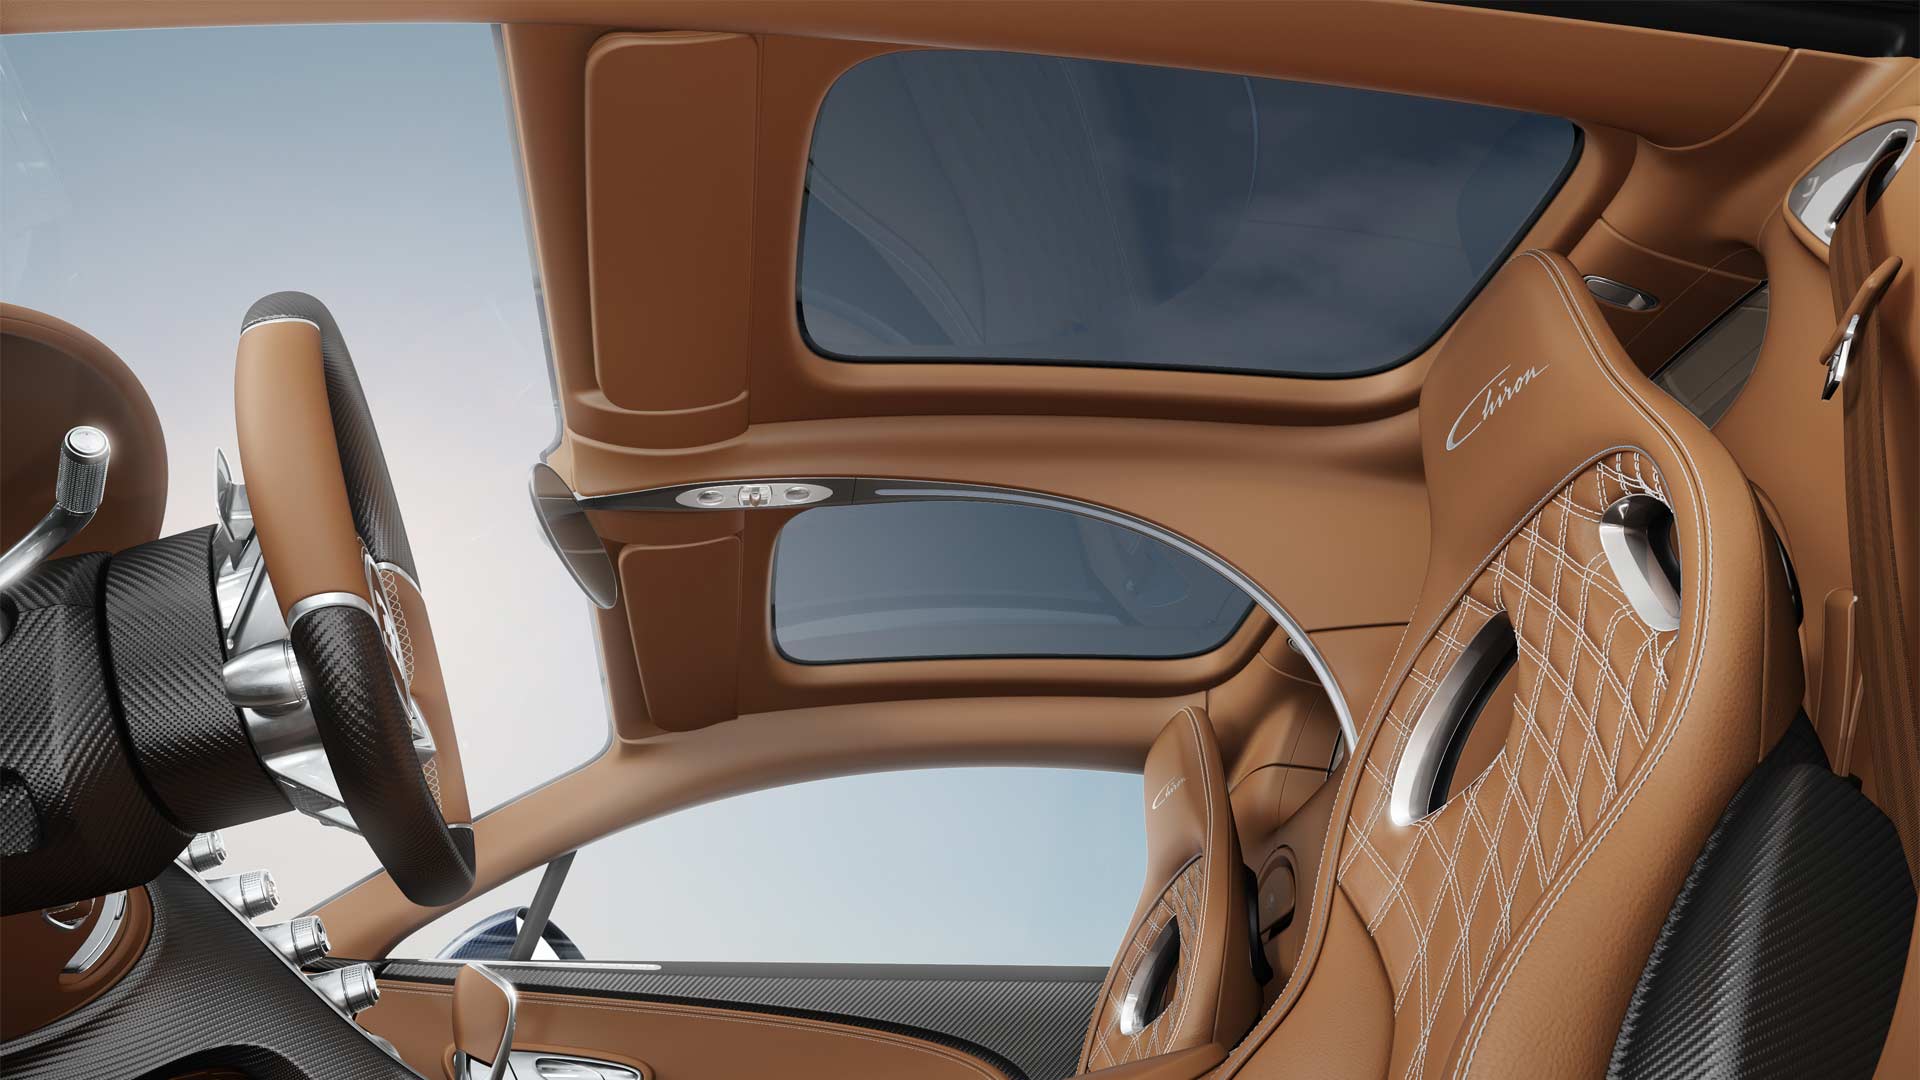 Bugatti-Chiron-Sky-View-glass-roof-inside